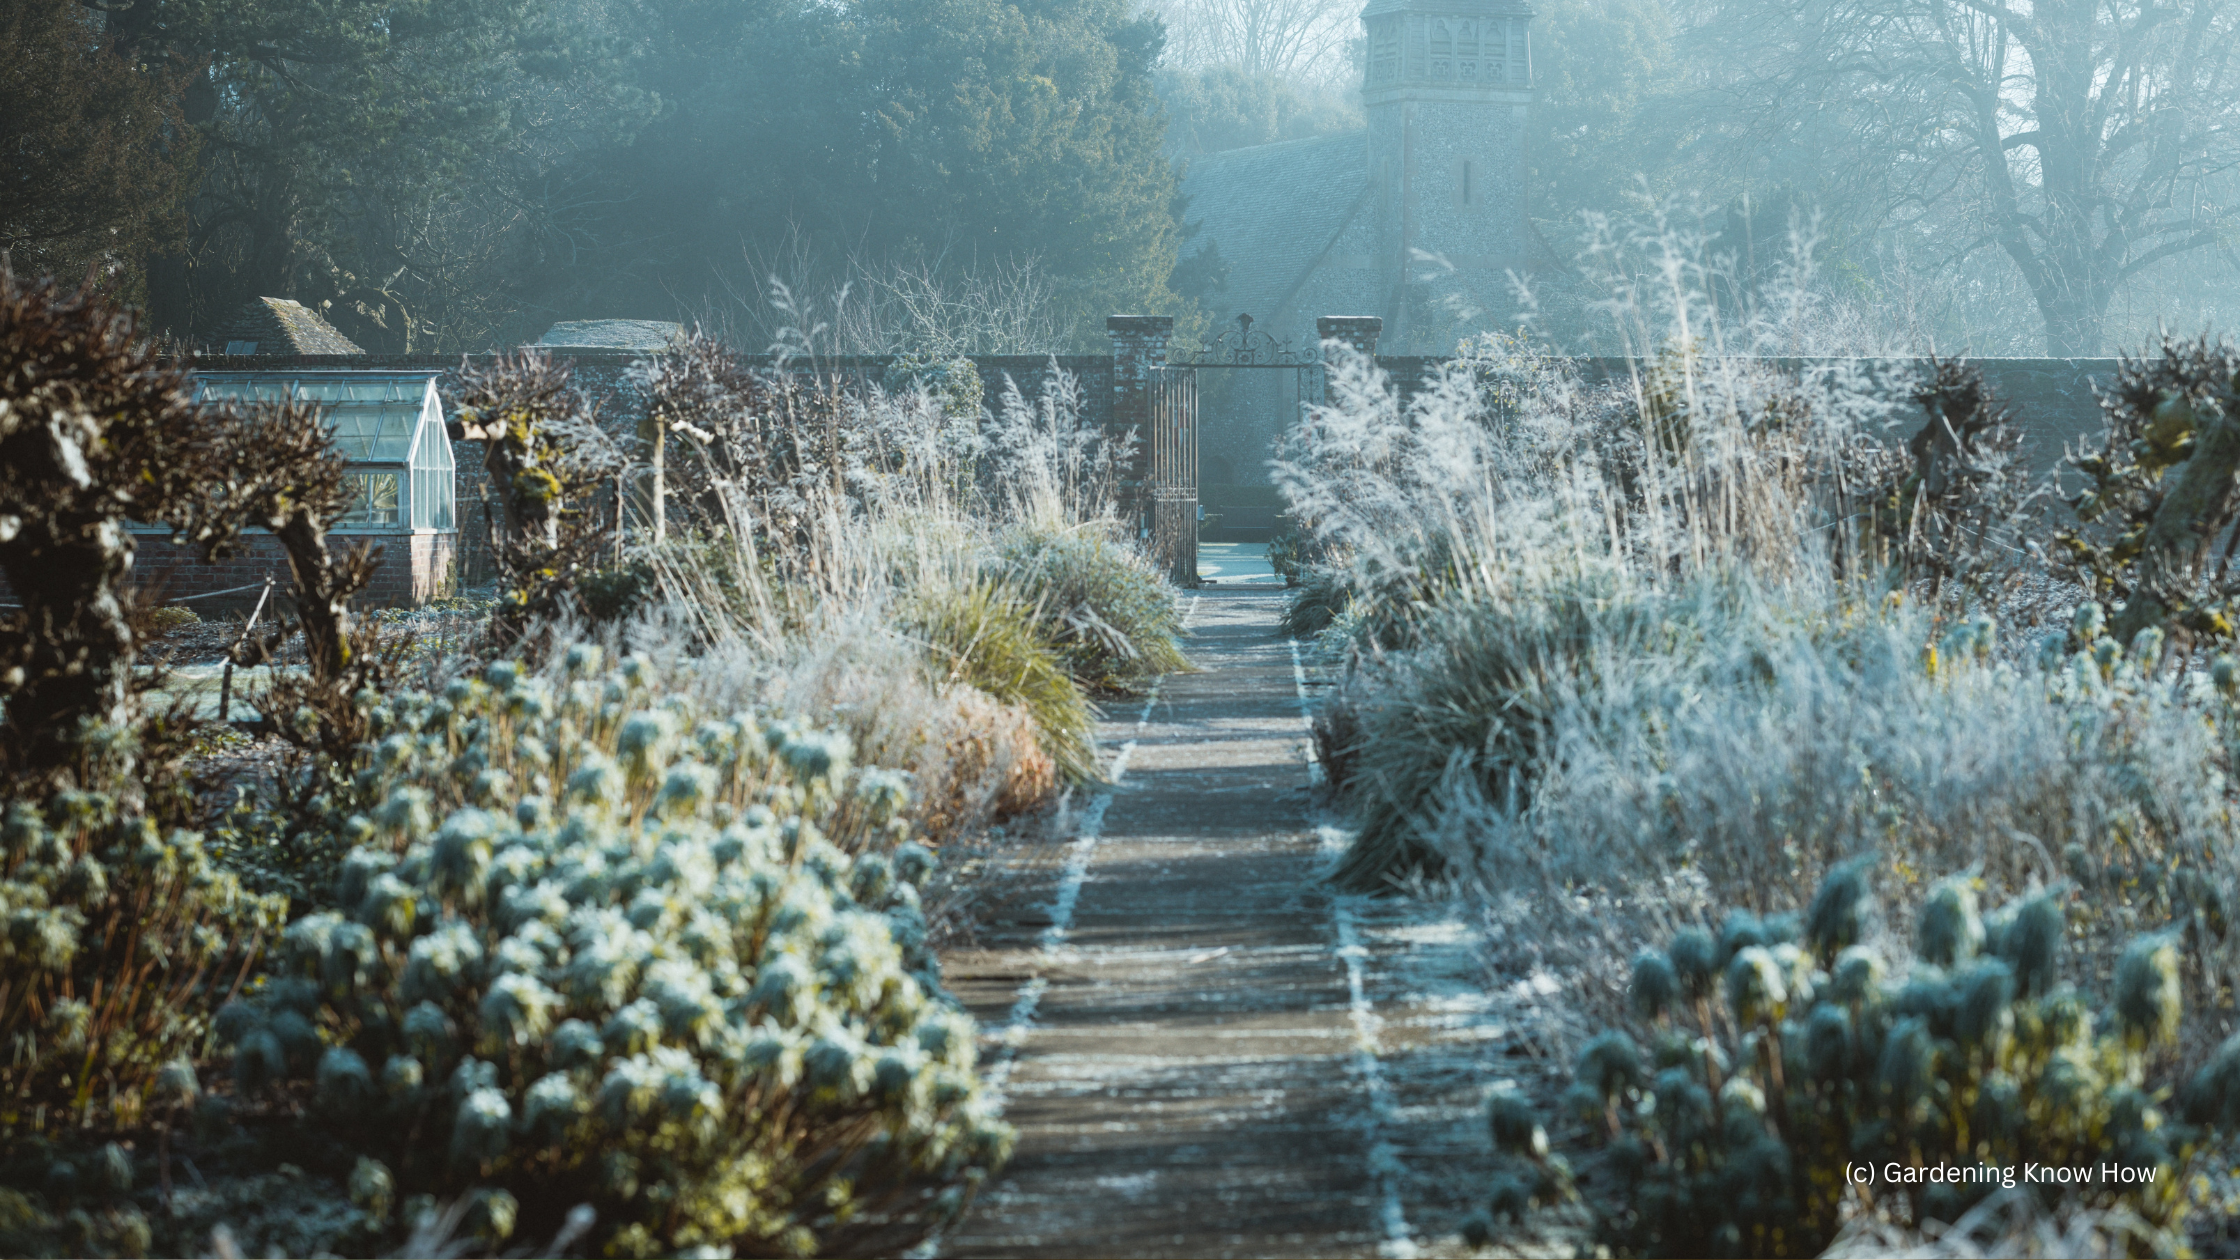 Frosty Garden